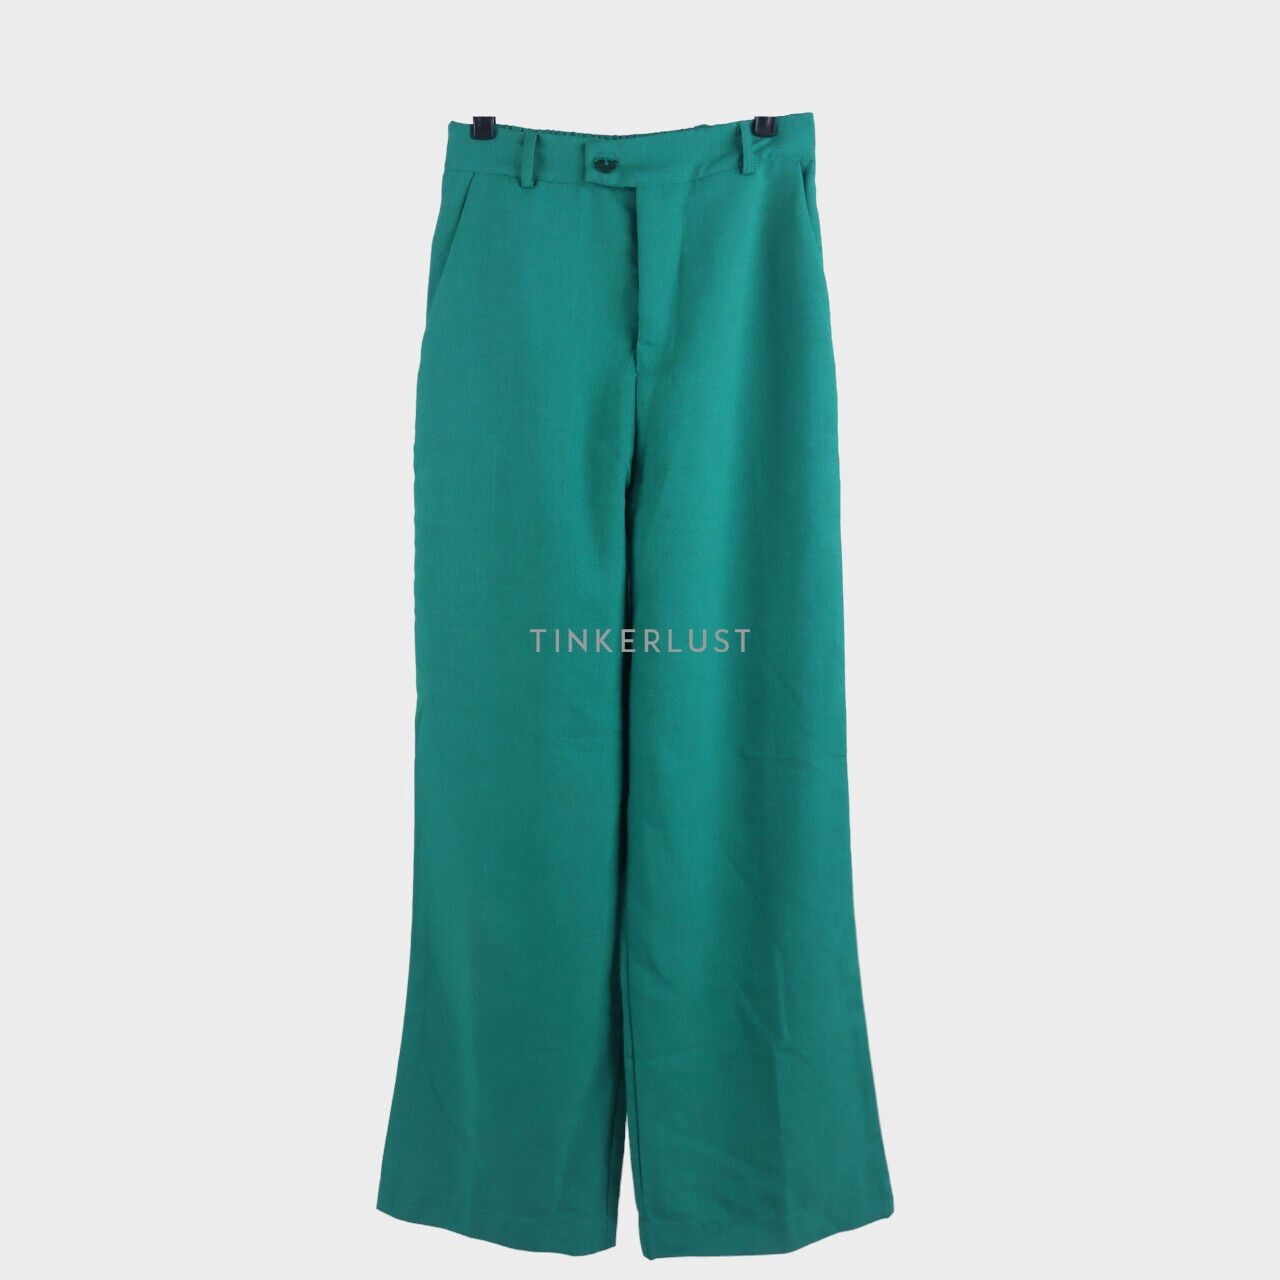 AVGAL Green Long Pants